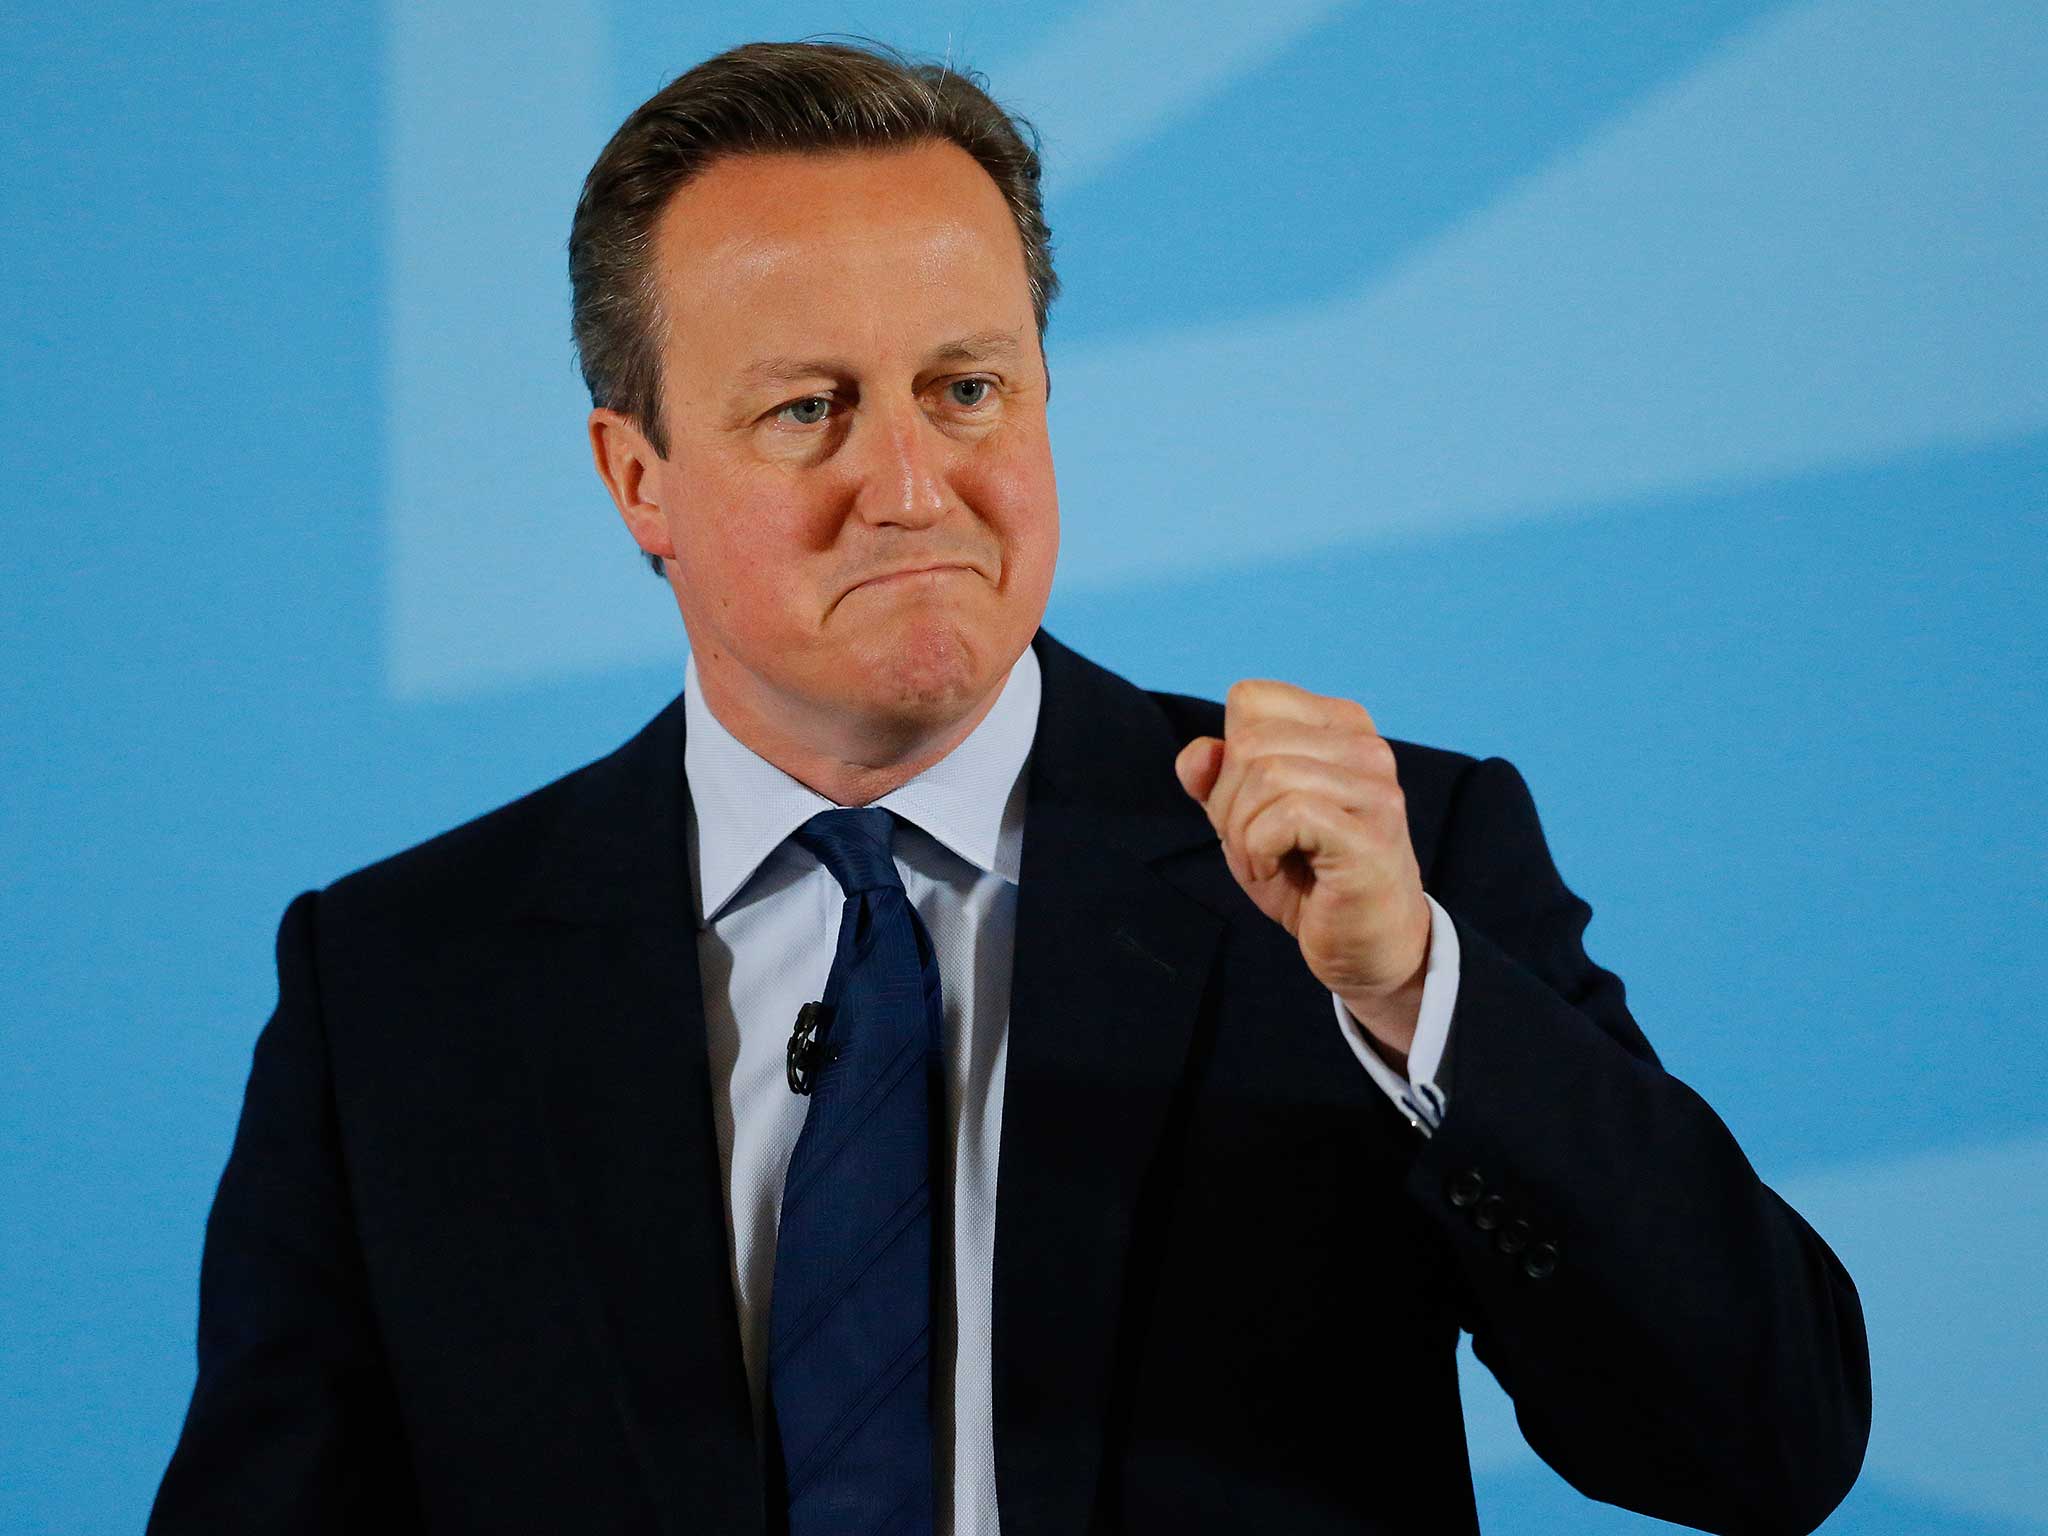 David Cameron addresses members of a World Economic Forum event focusing on Britain's EU referendum in London